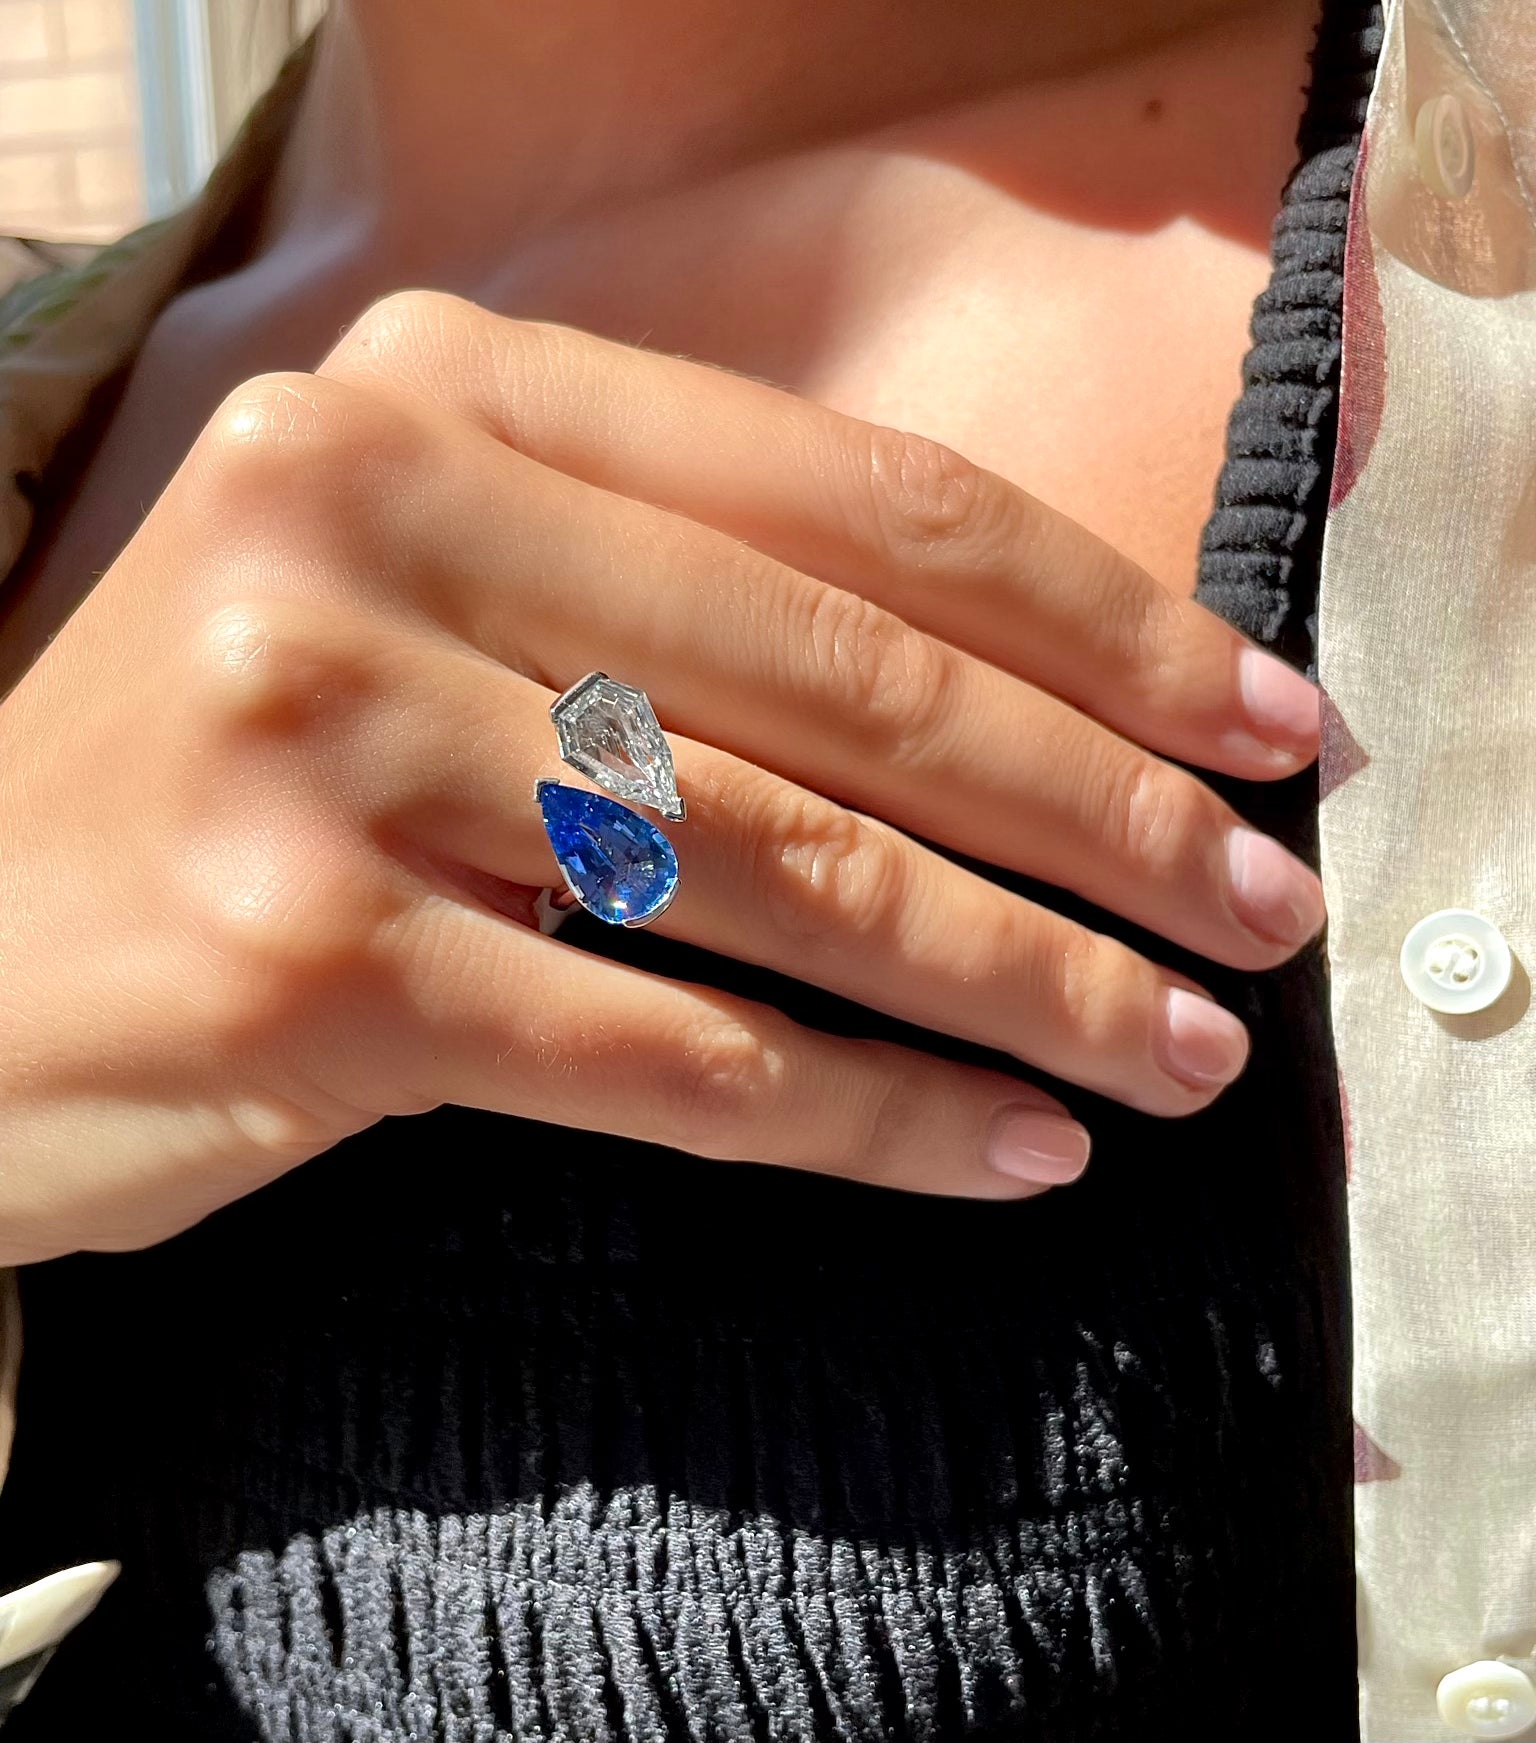 The Daphne Blue Sapphire & Diamond Ring